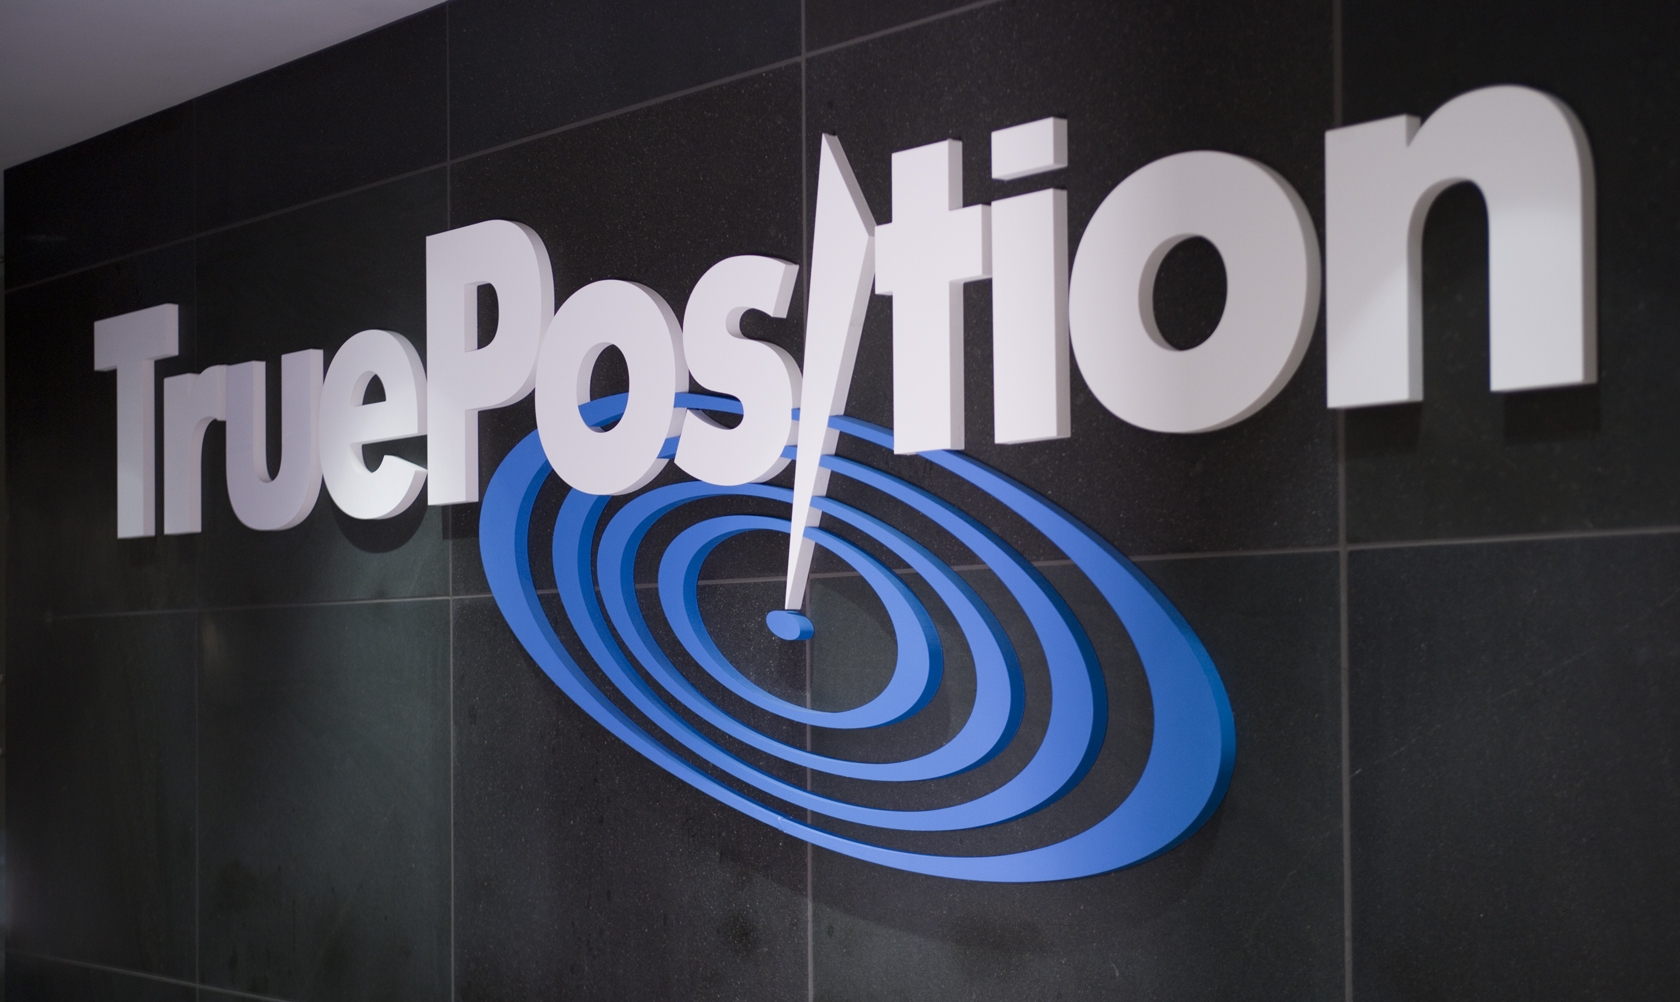 The TruePosition logo dominates the second floor training area in their corporate headquarters in Berwyn, Pennsylvania.